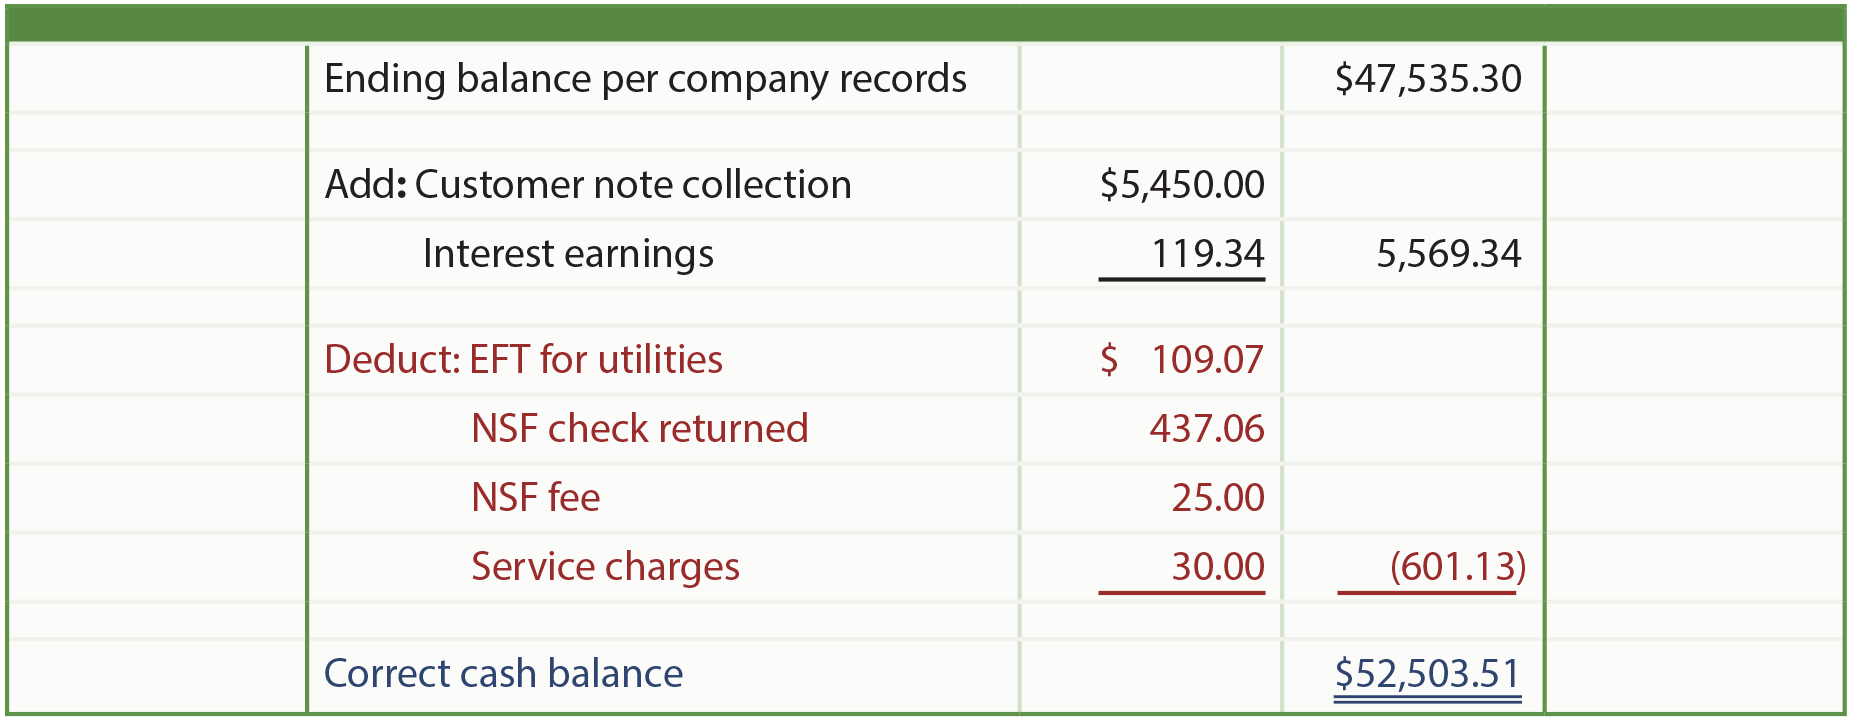 Ending Balance Per Company Records illustration